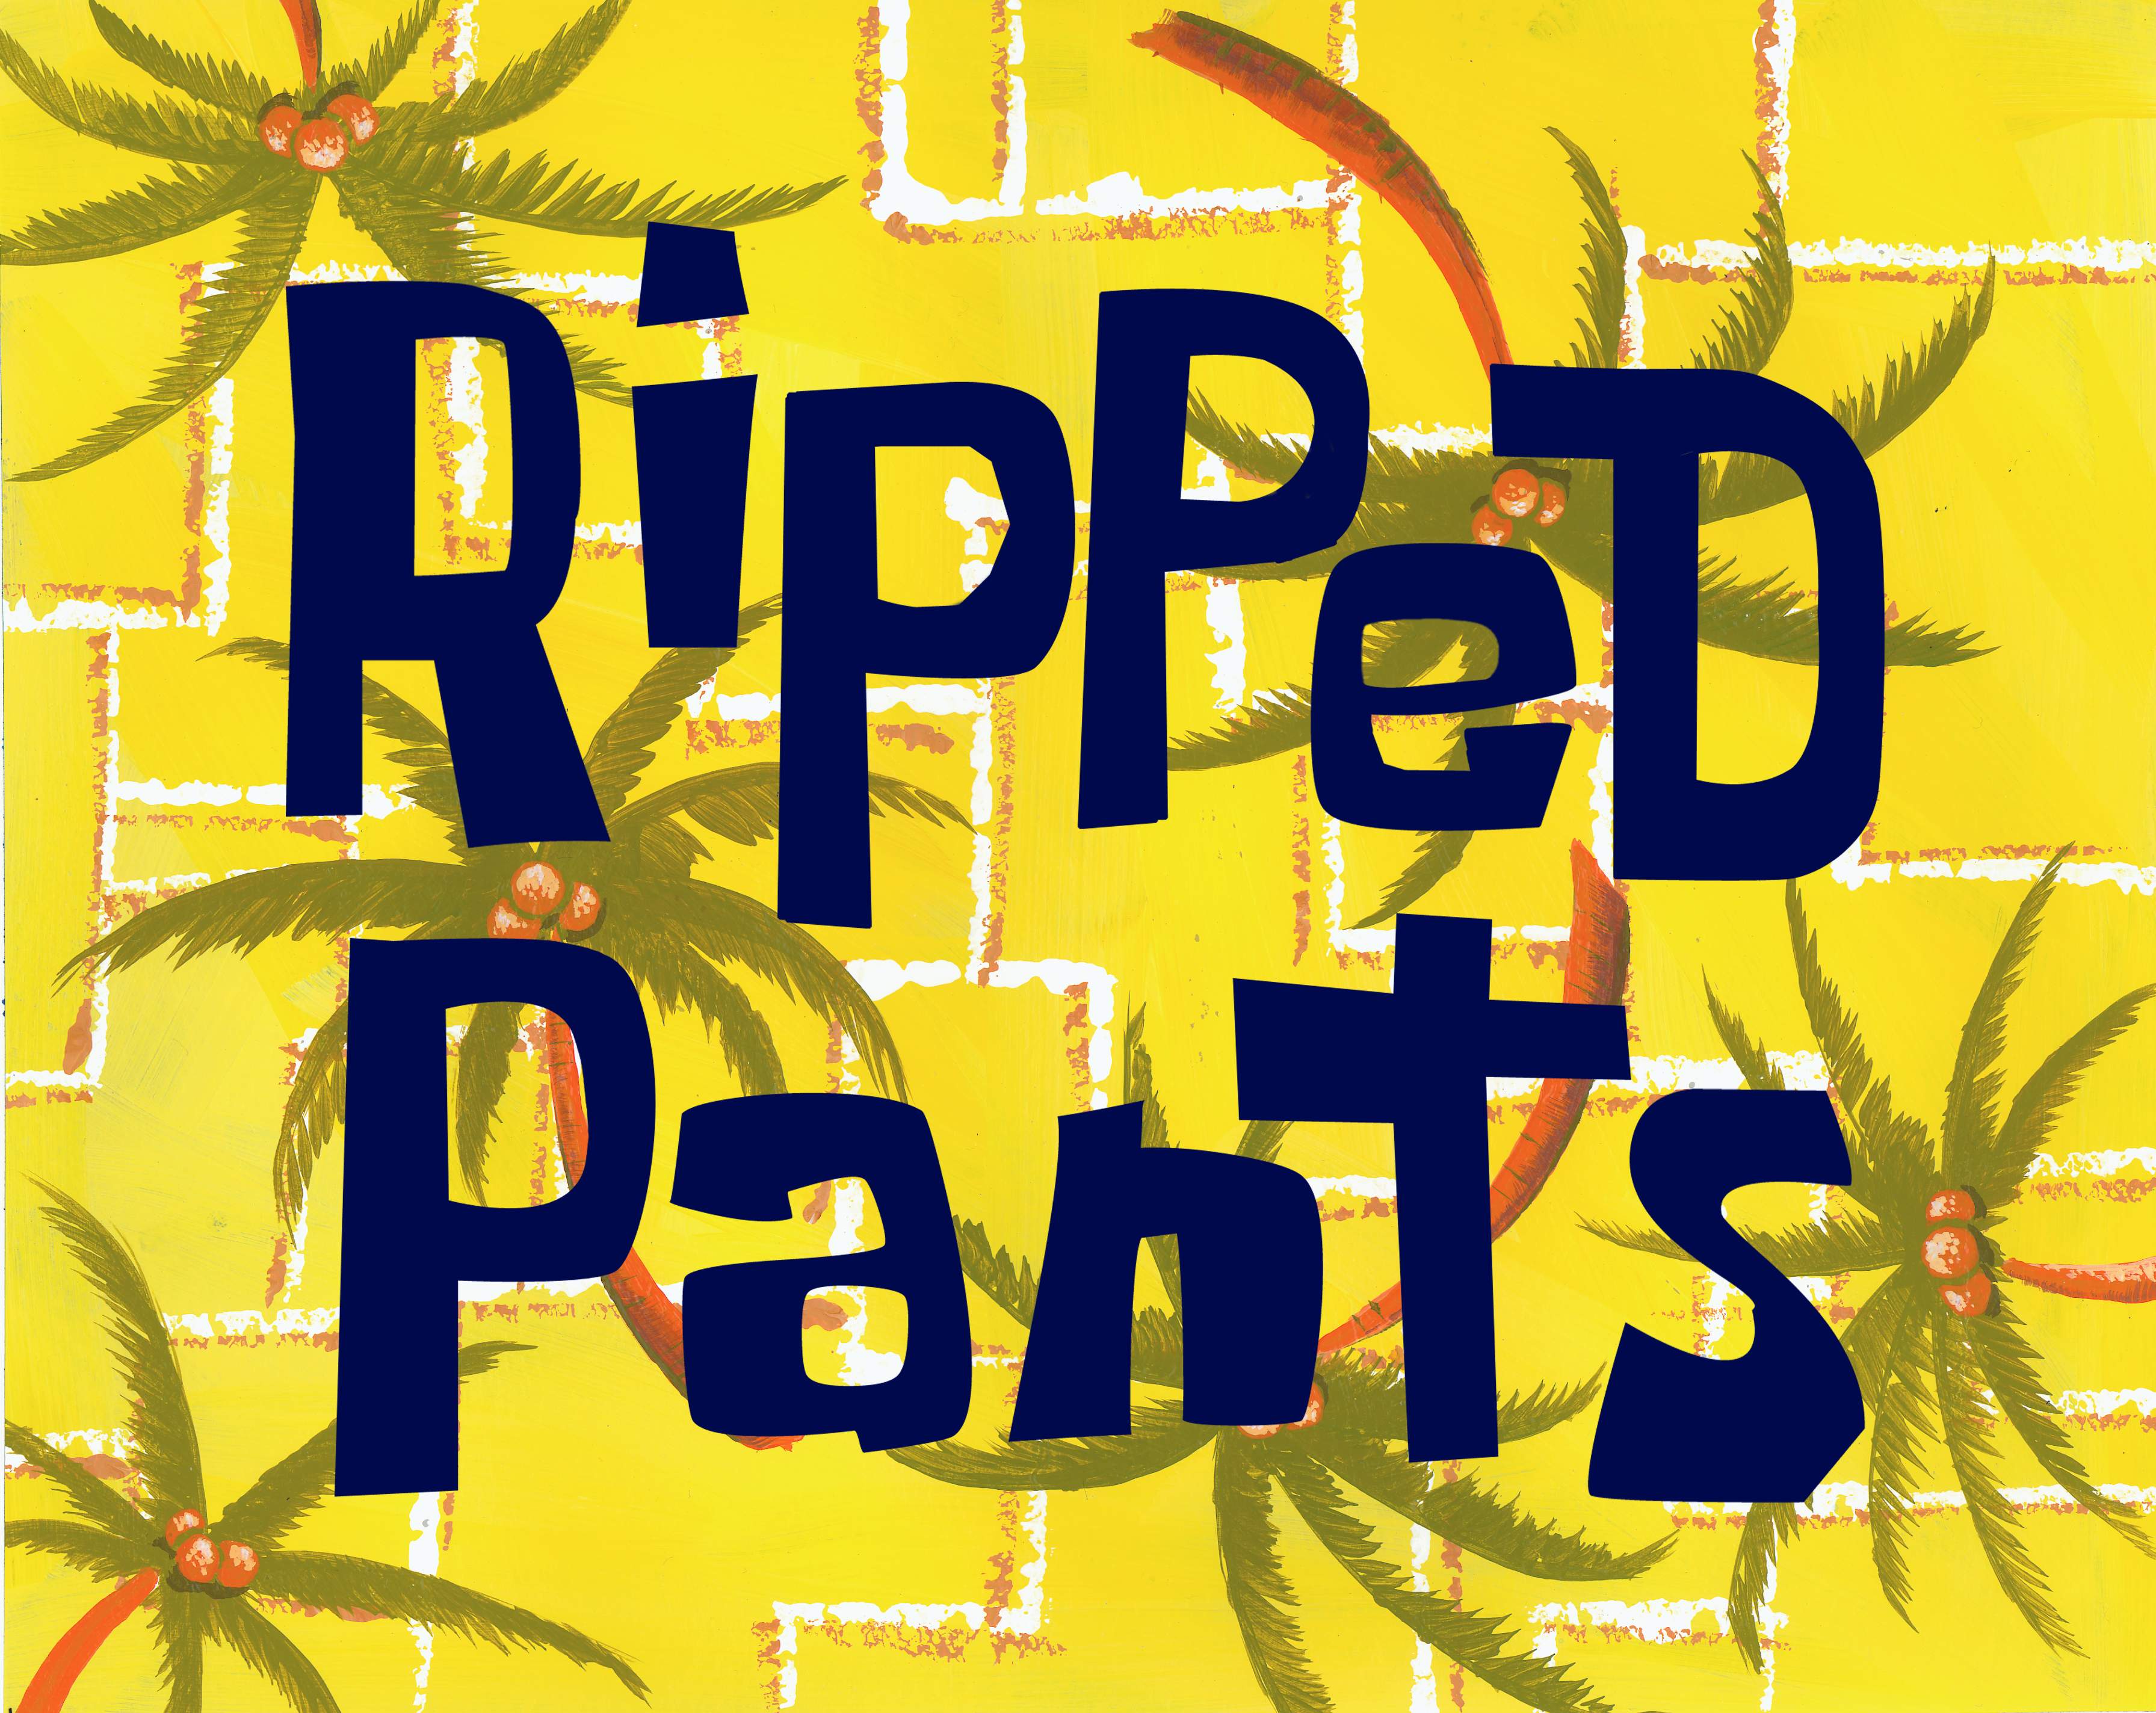 Spongebob Squarepants Ripped Pants episode: One critic's opinion